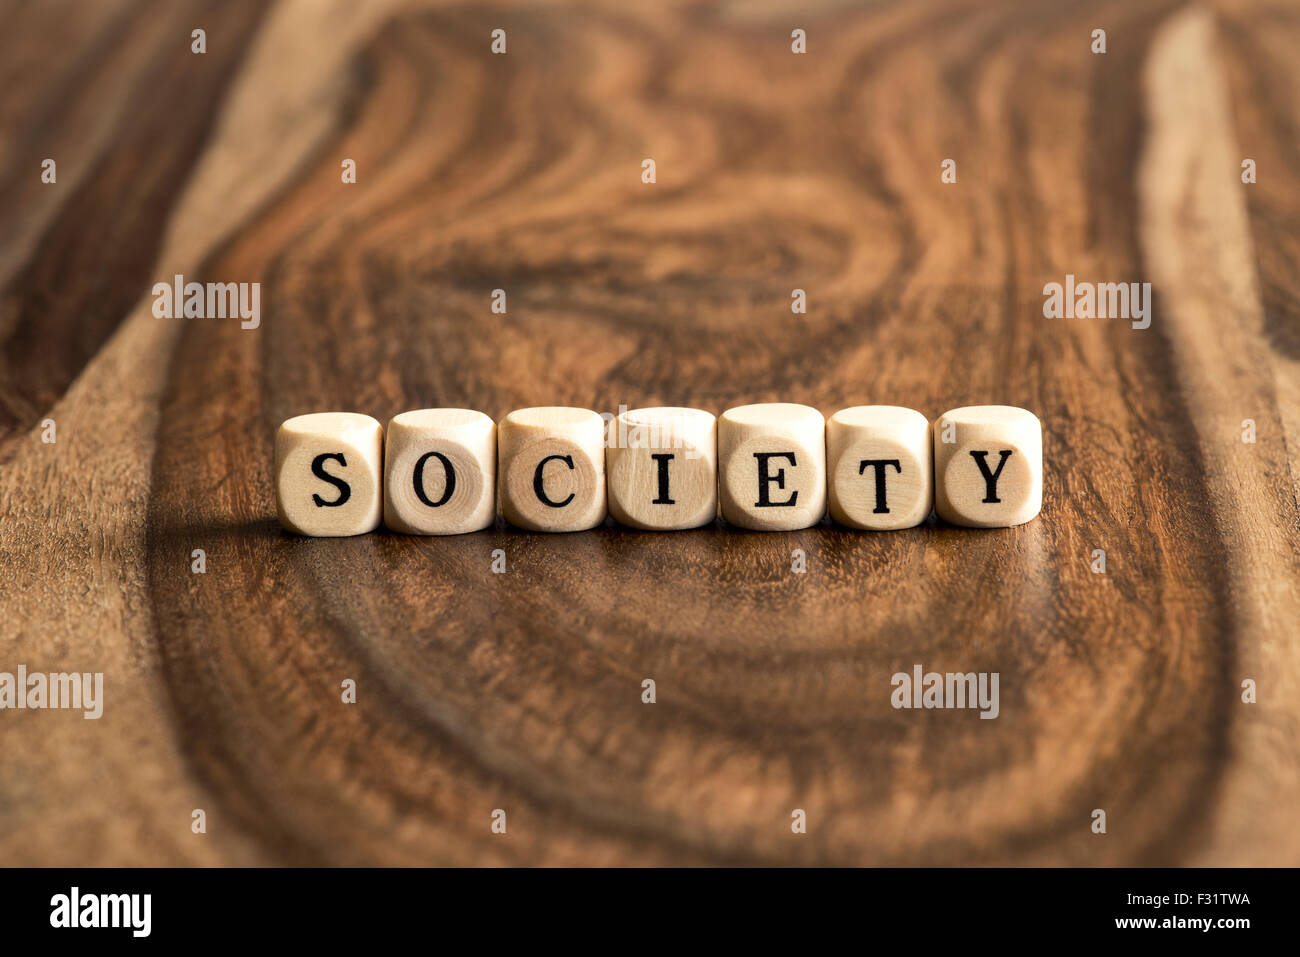 SOCIETY word background on wood blocks Stock Photo